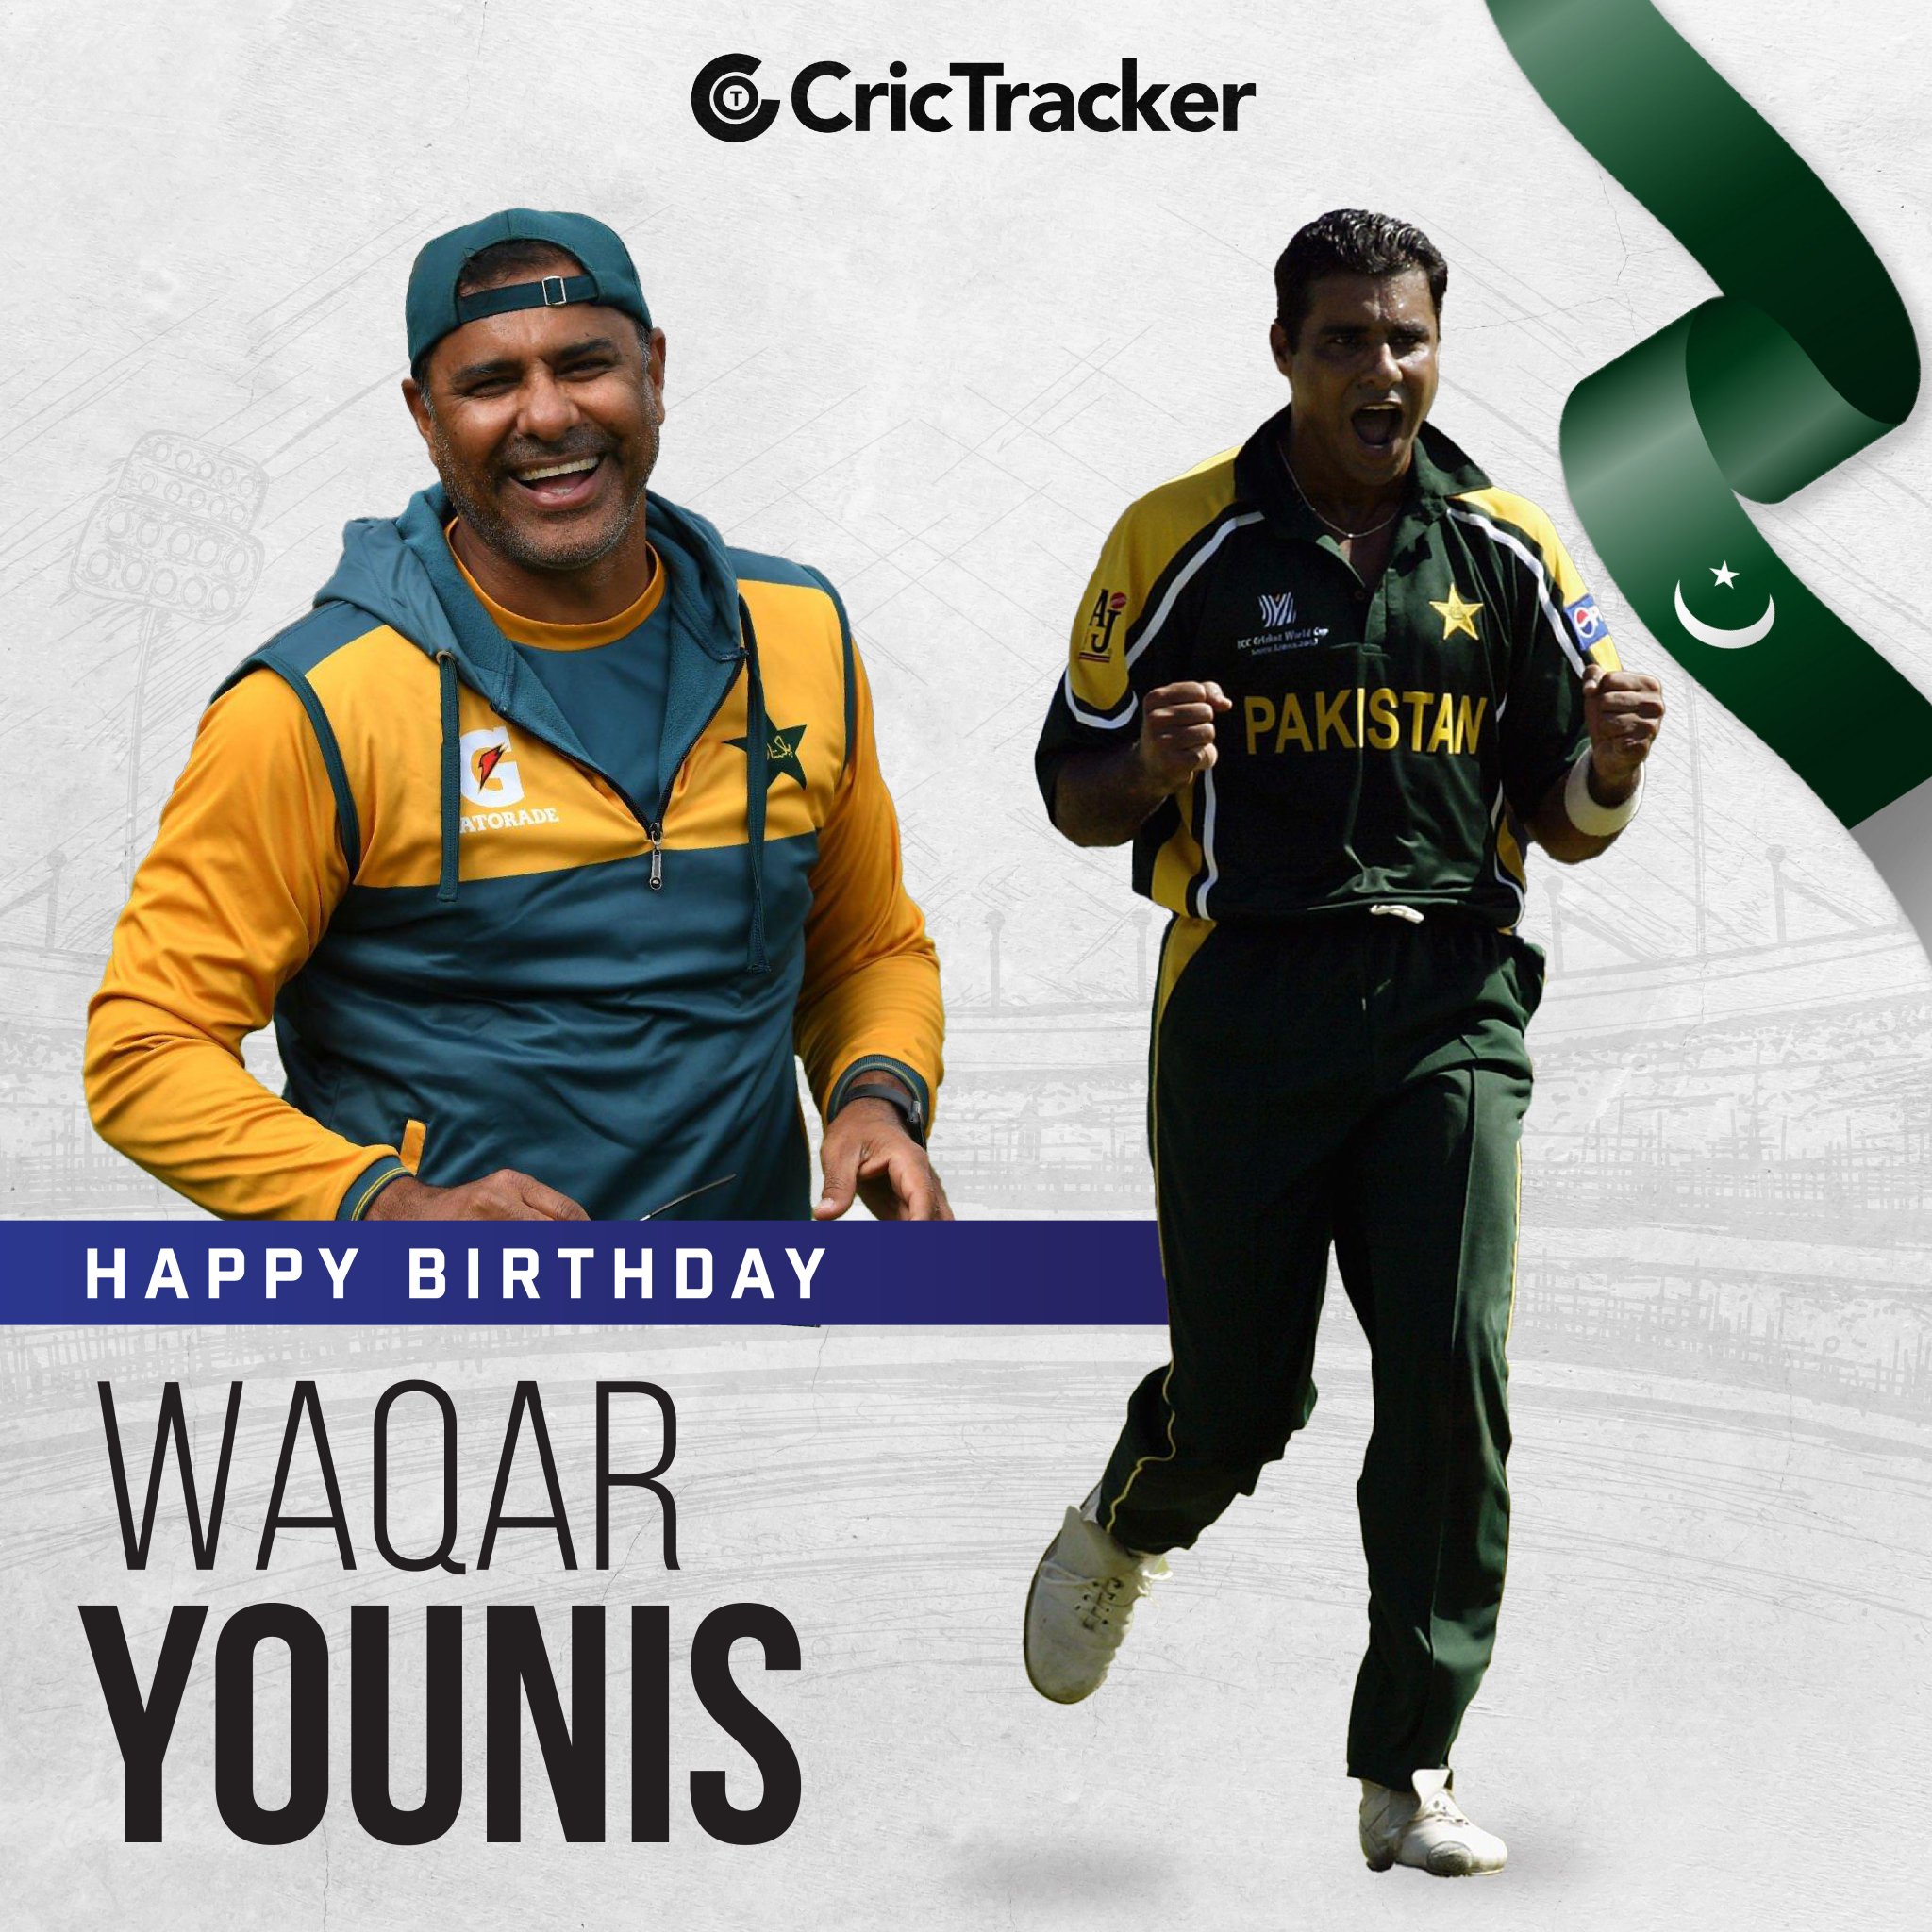 Waqar Younis turns 51 today. Wishing the Pakistan legend a very happy birthday. 